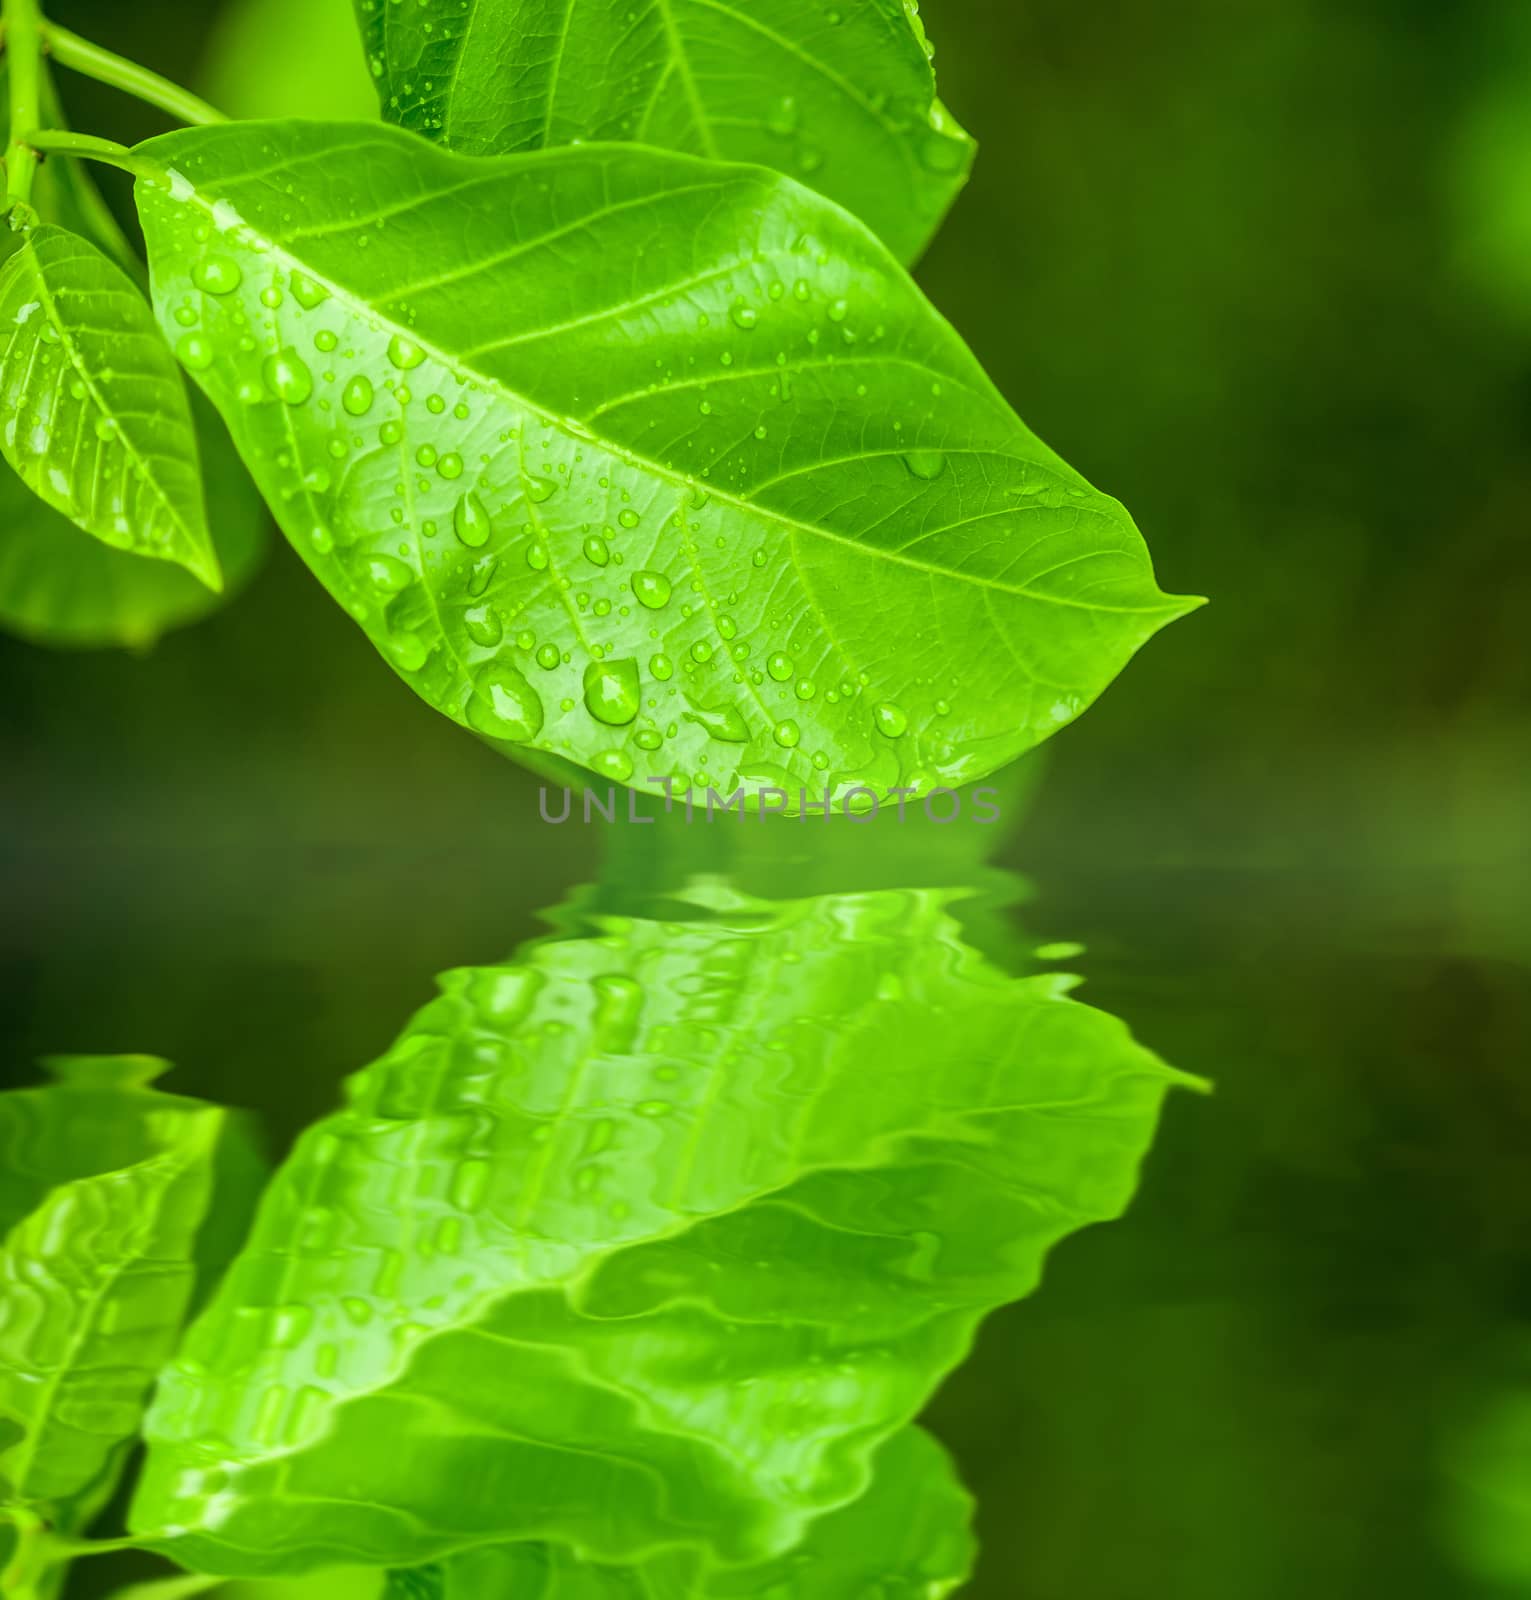 Water drop on leaf by seksan44